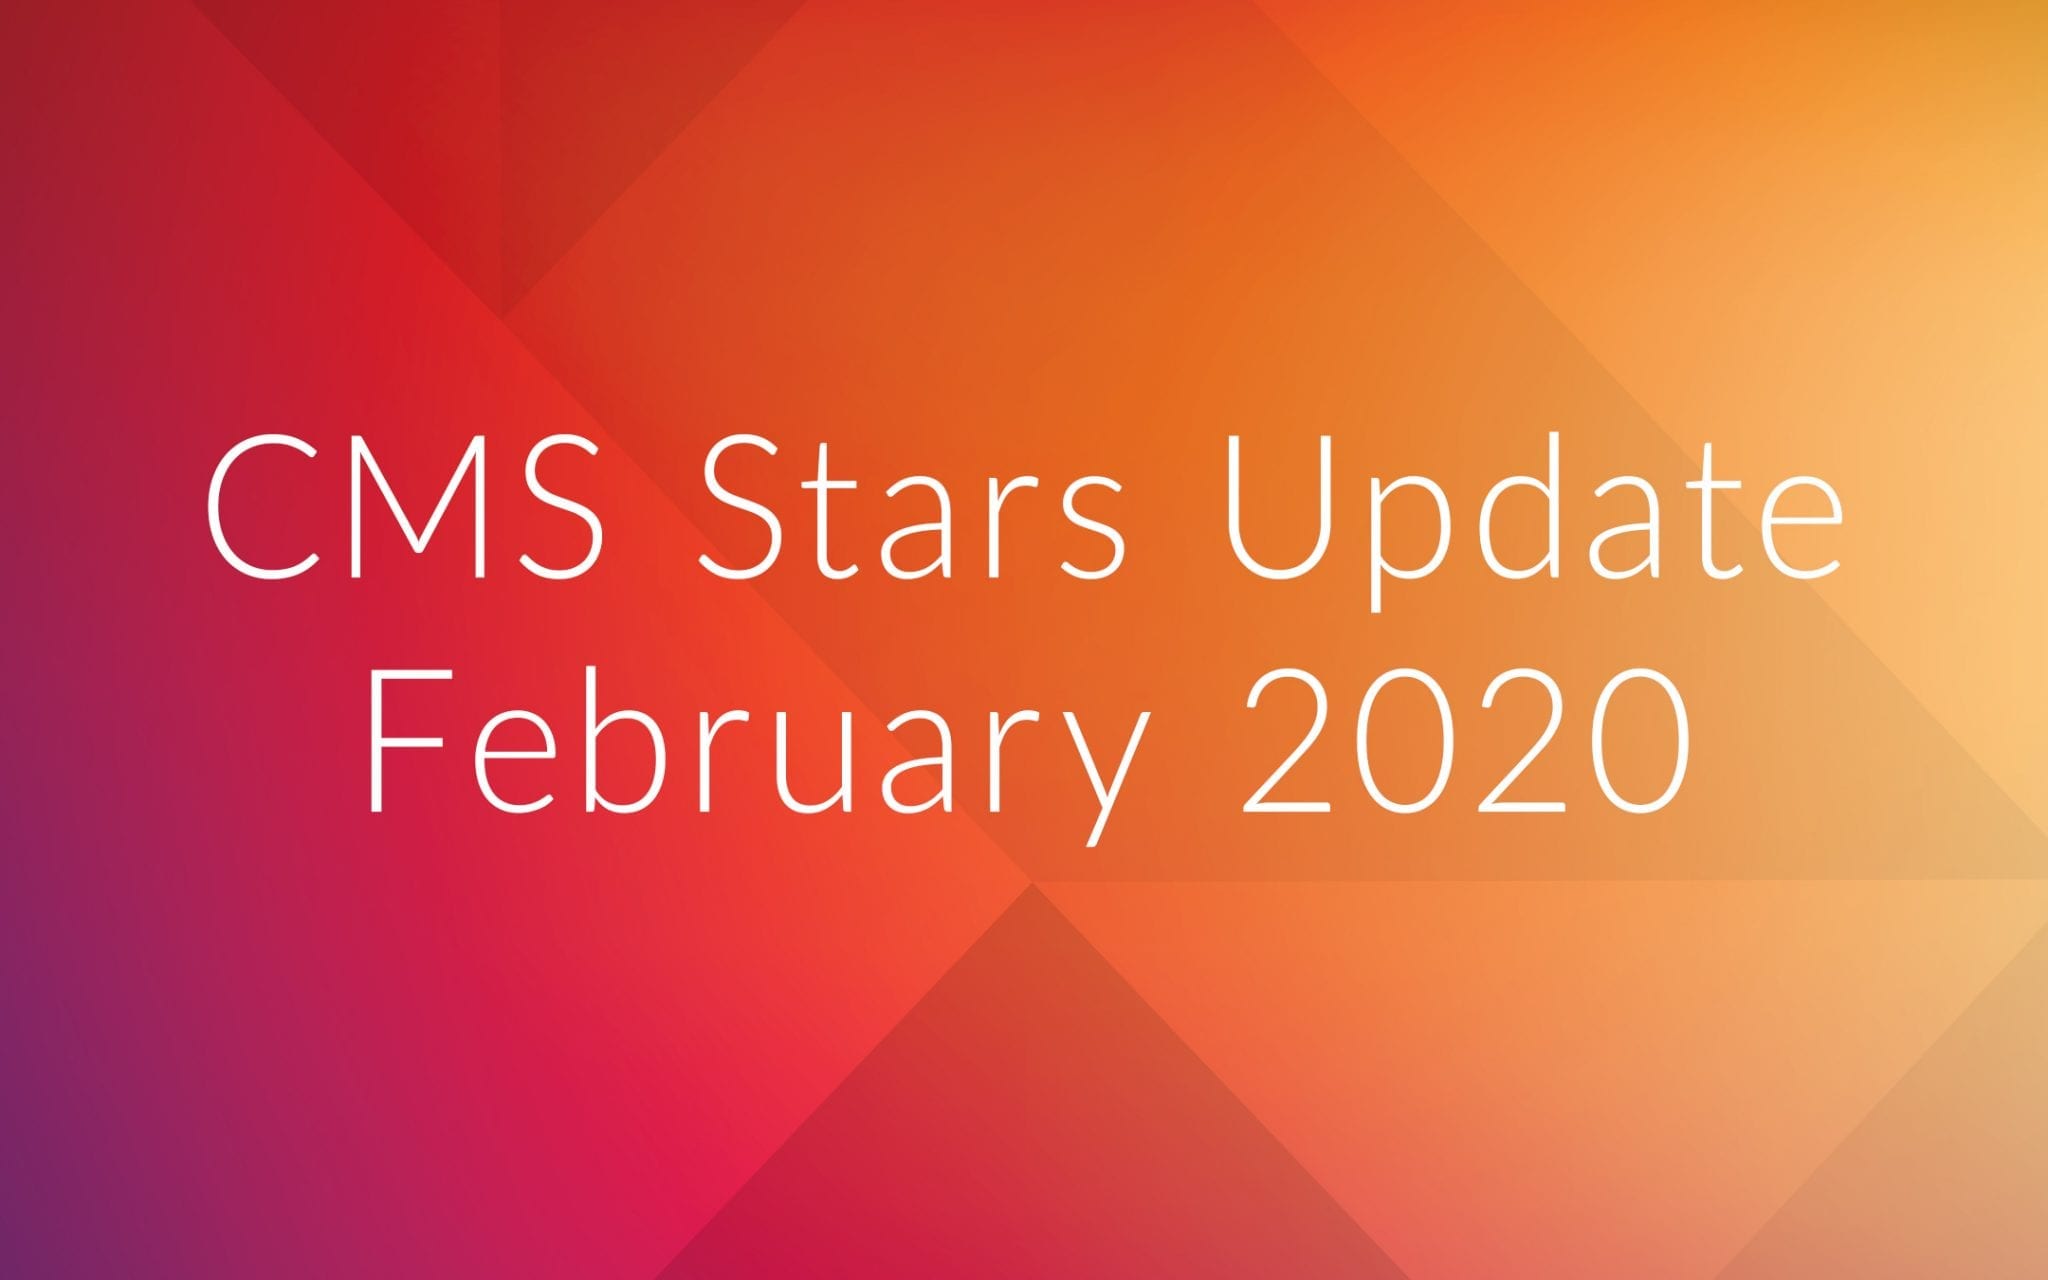 CMS Stars Update for Medicare Advantage plans February 2020 image